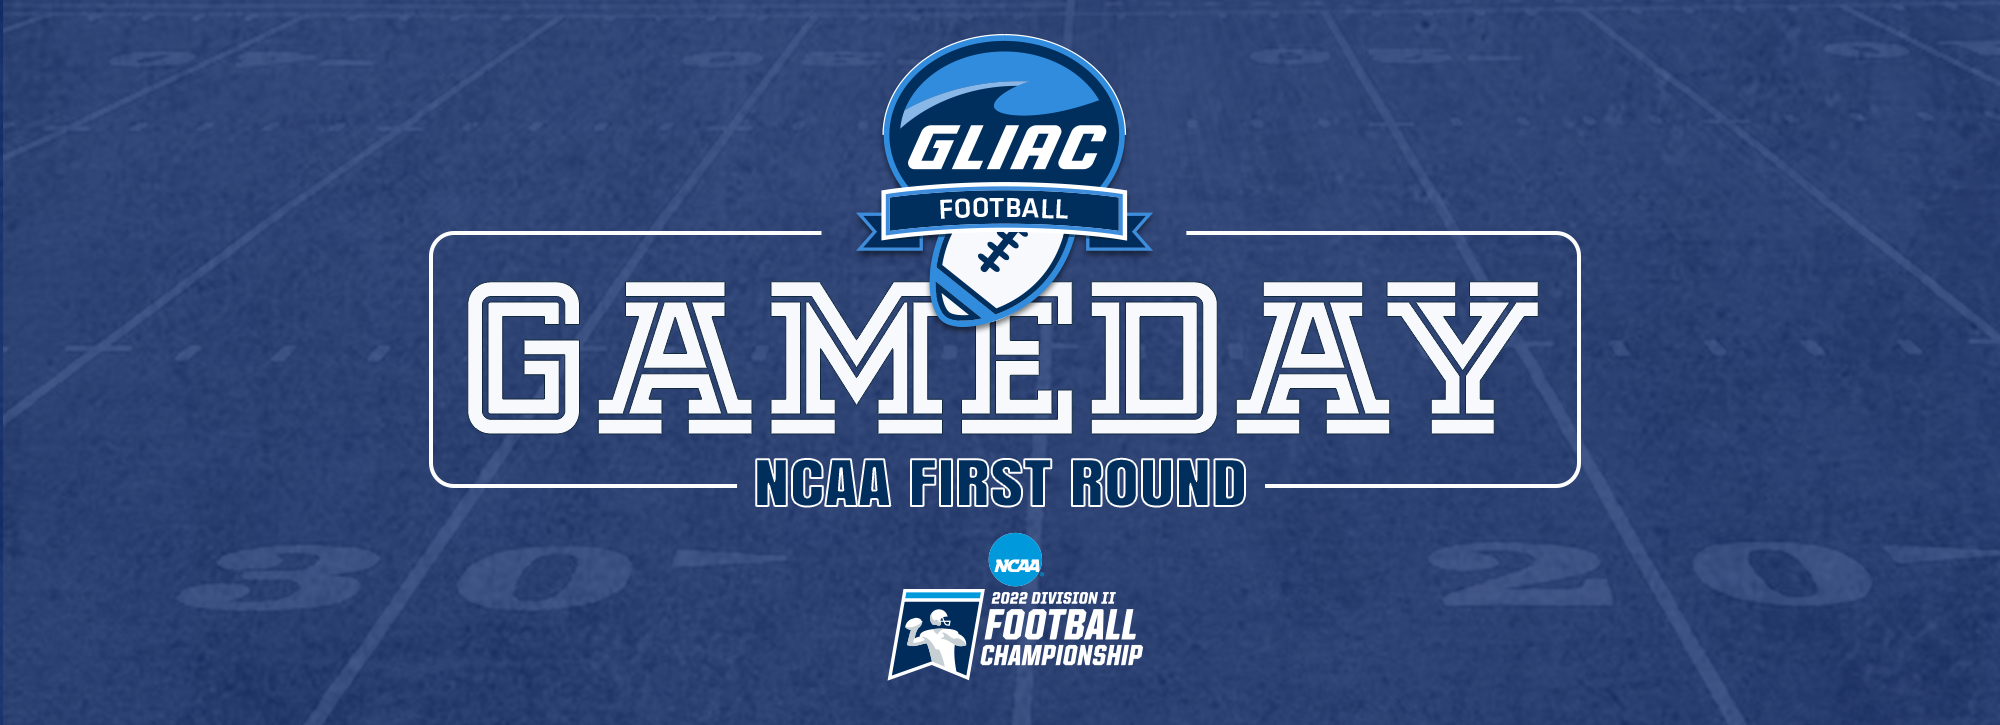 2022 GLIAC Football Gameday - NCAA Division II Championship First Round